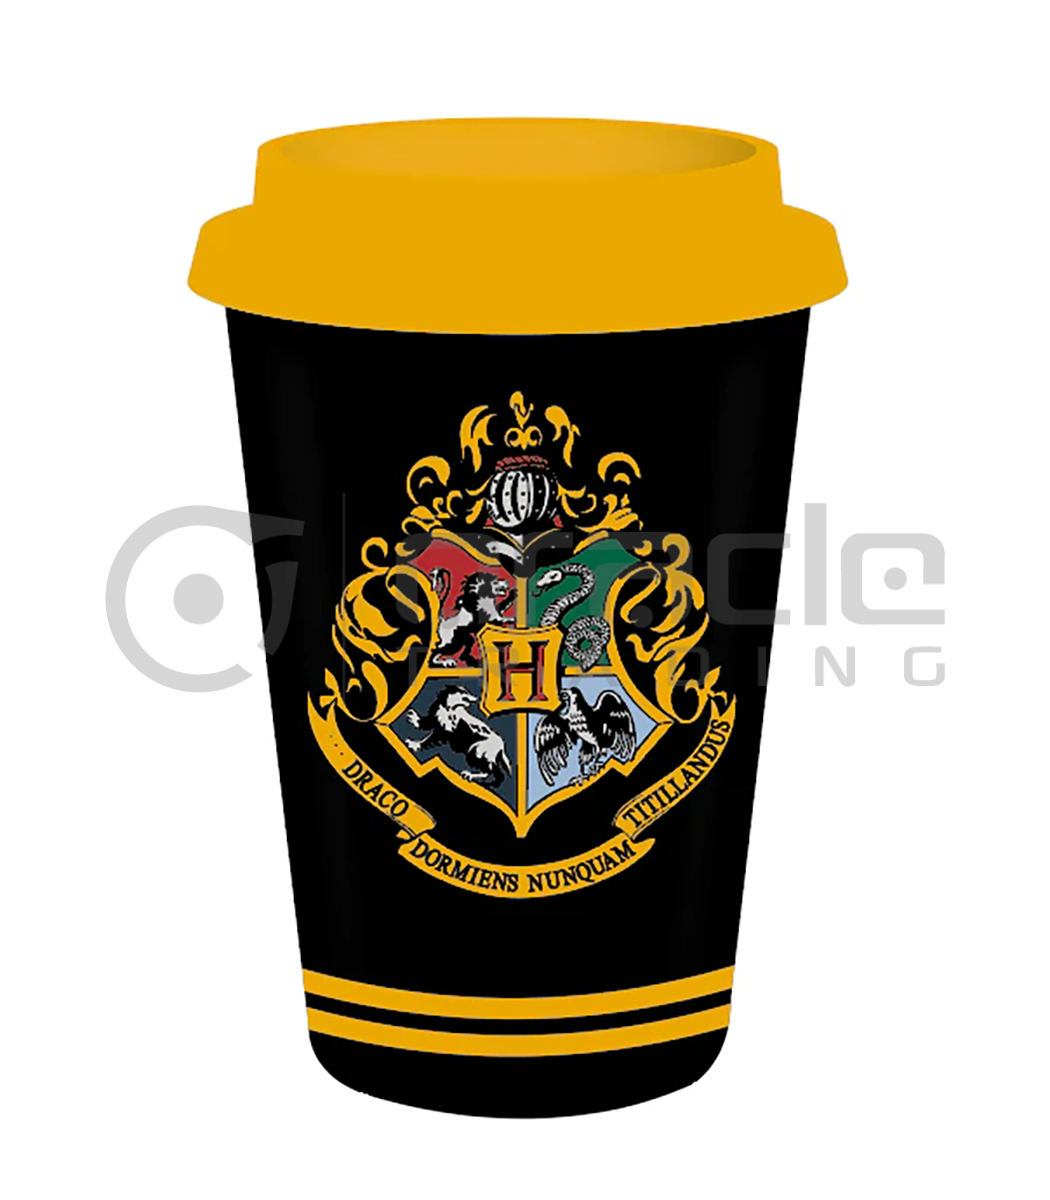 Harry Potter Ceramic Travel Mug - Hogwarts